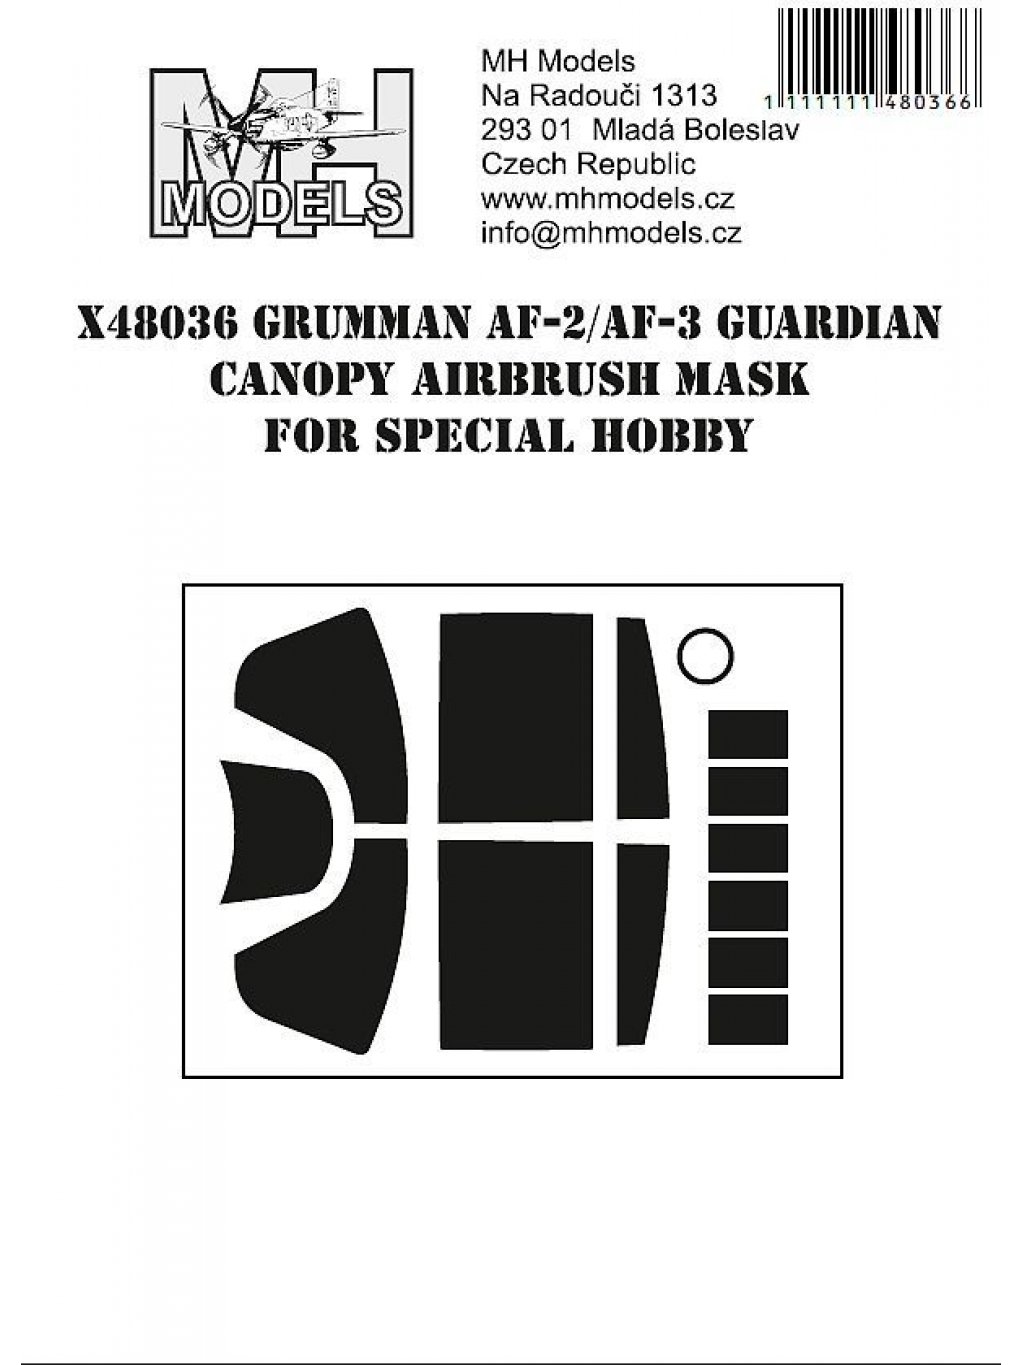 Grumman AF-2/AF-3 Guardian canopy airbrush mask for Special Hobby